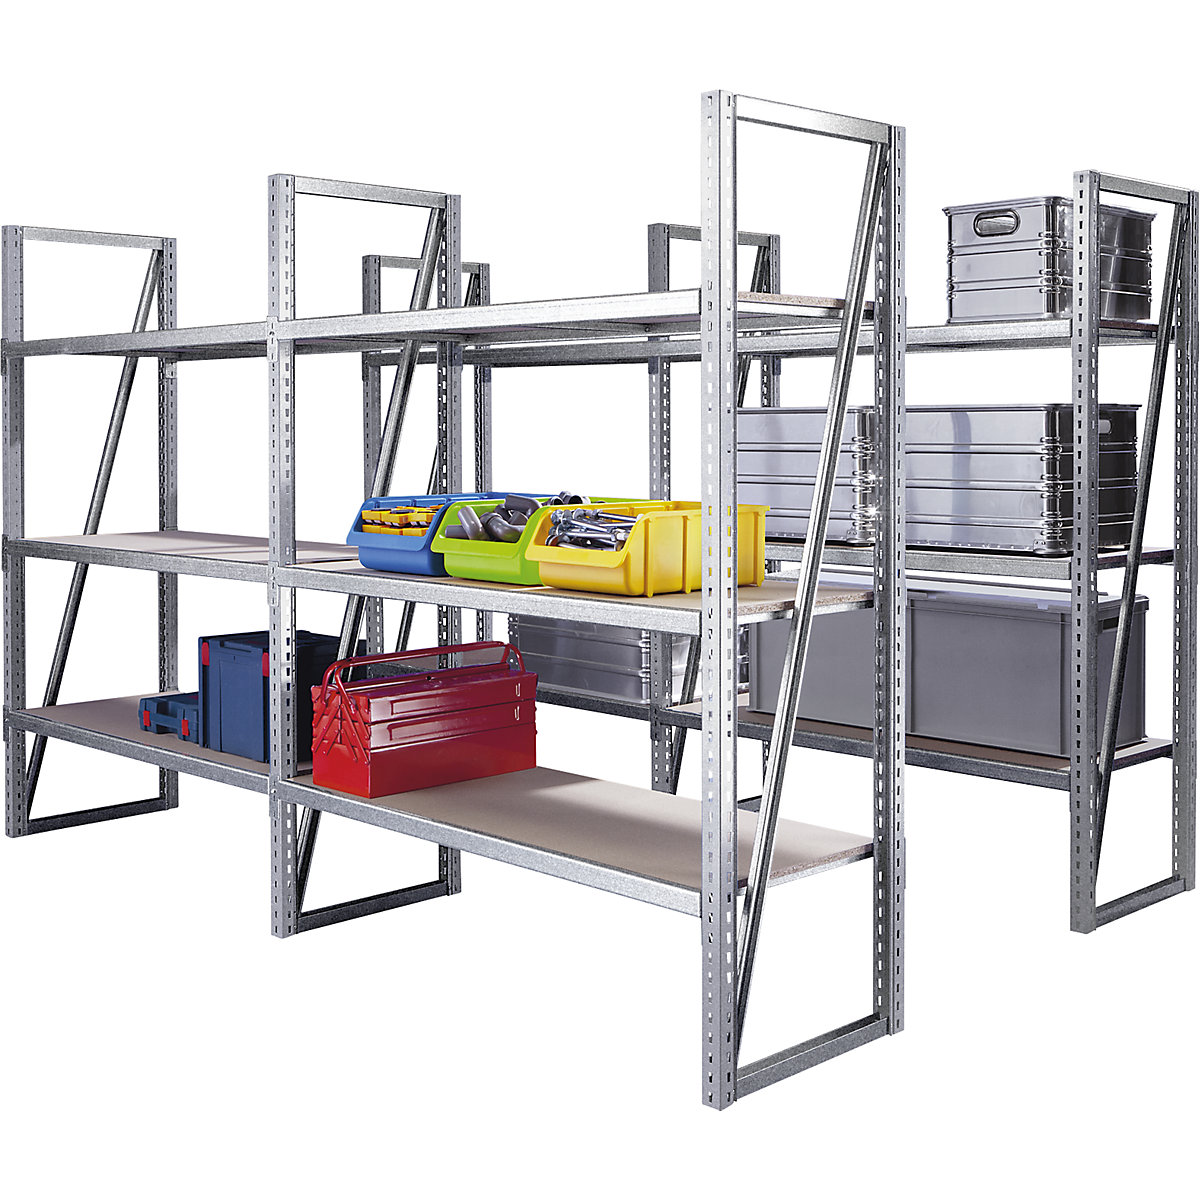 Wide span boltless shelf unit, shelf width 1500 mm – eurokraft pro, shelf unit height 1990 mm, shelf depth 600 mm, standard shelf unit, zinc plated